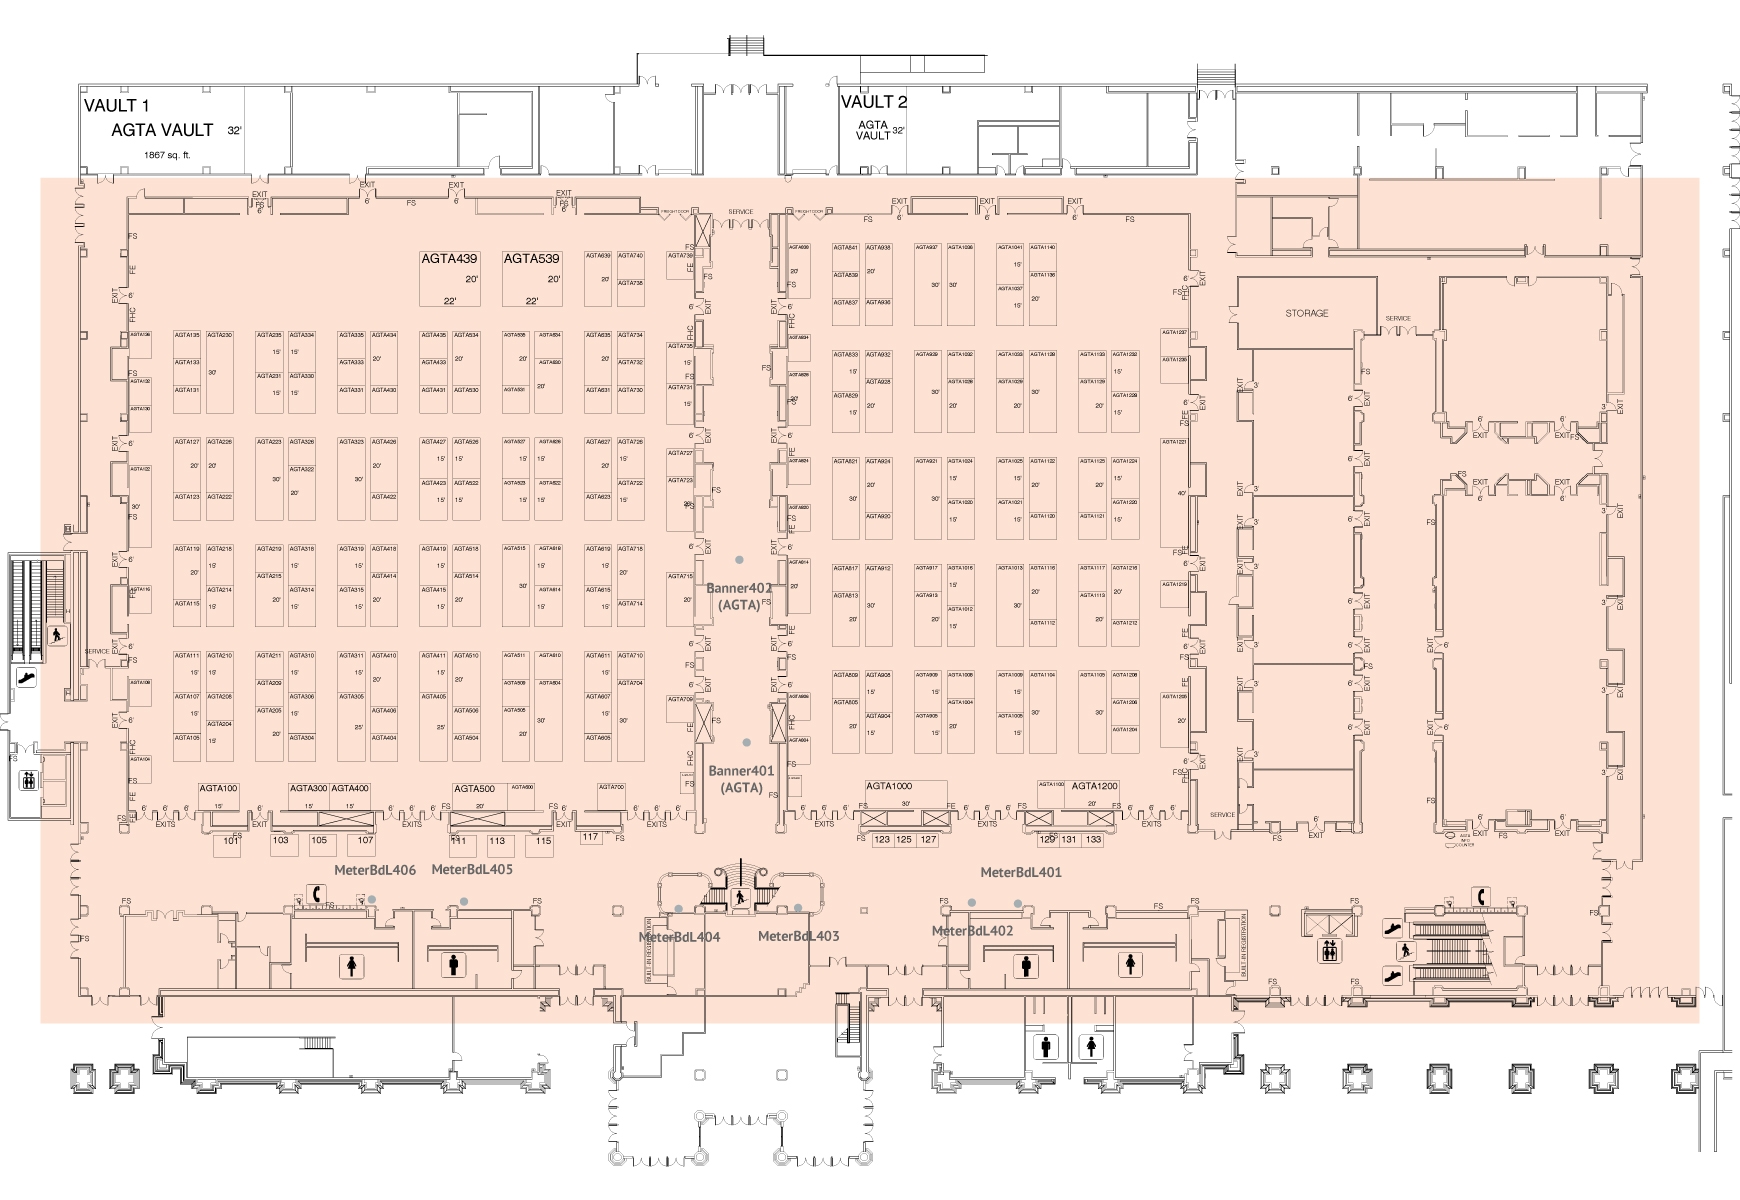 Mandalay Bay Convention Center floor plan